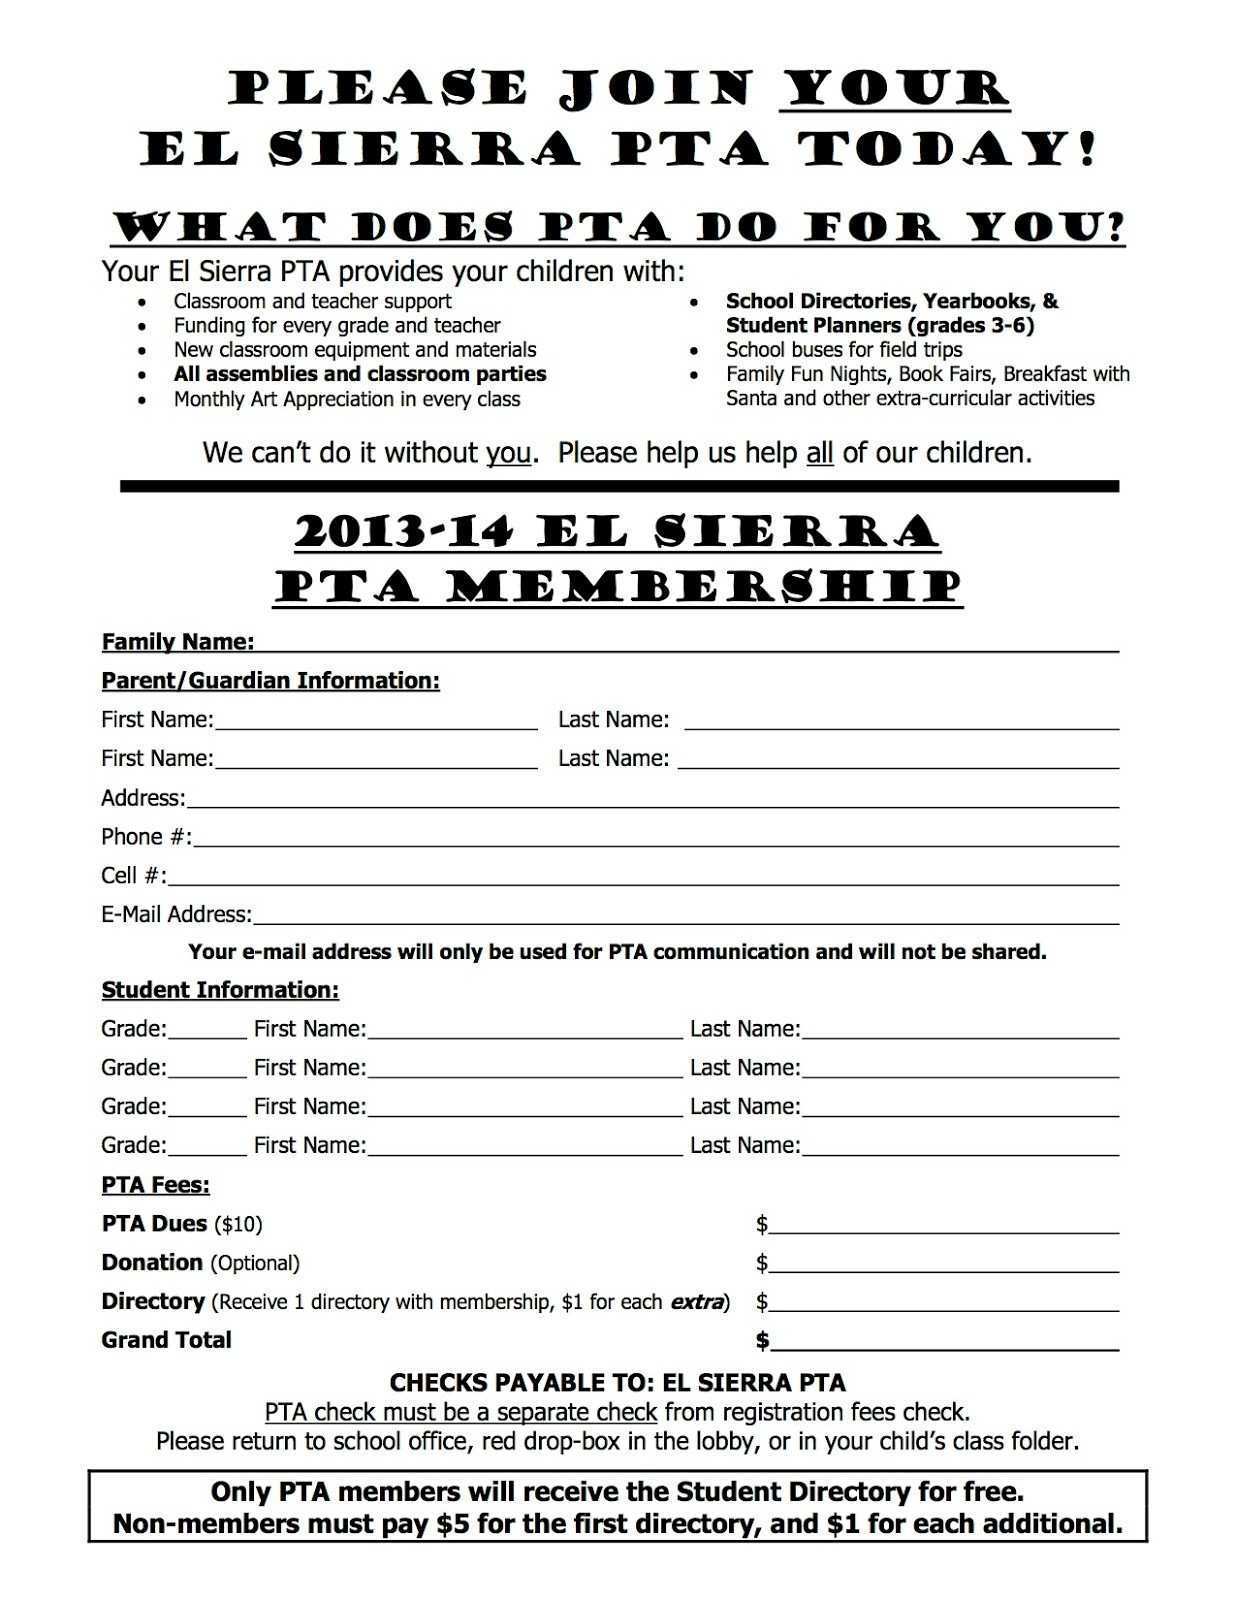 80 Report Pta Membership Flyer Template in Word for Pta Membership Flyer Template